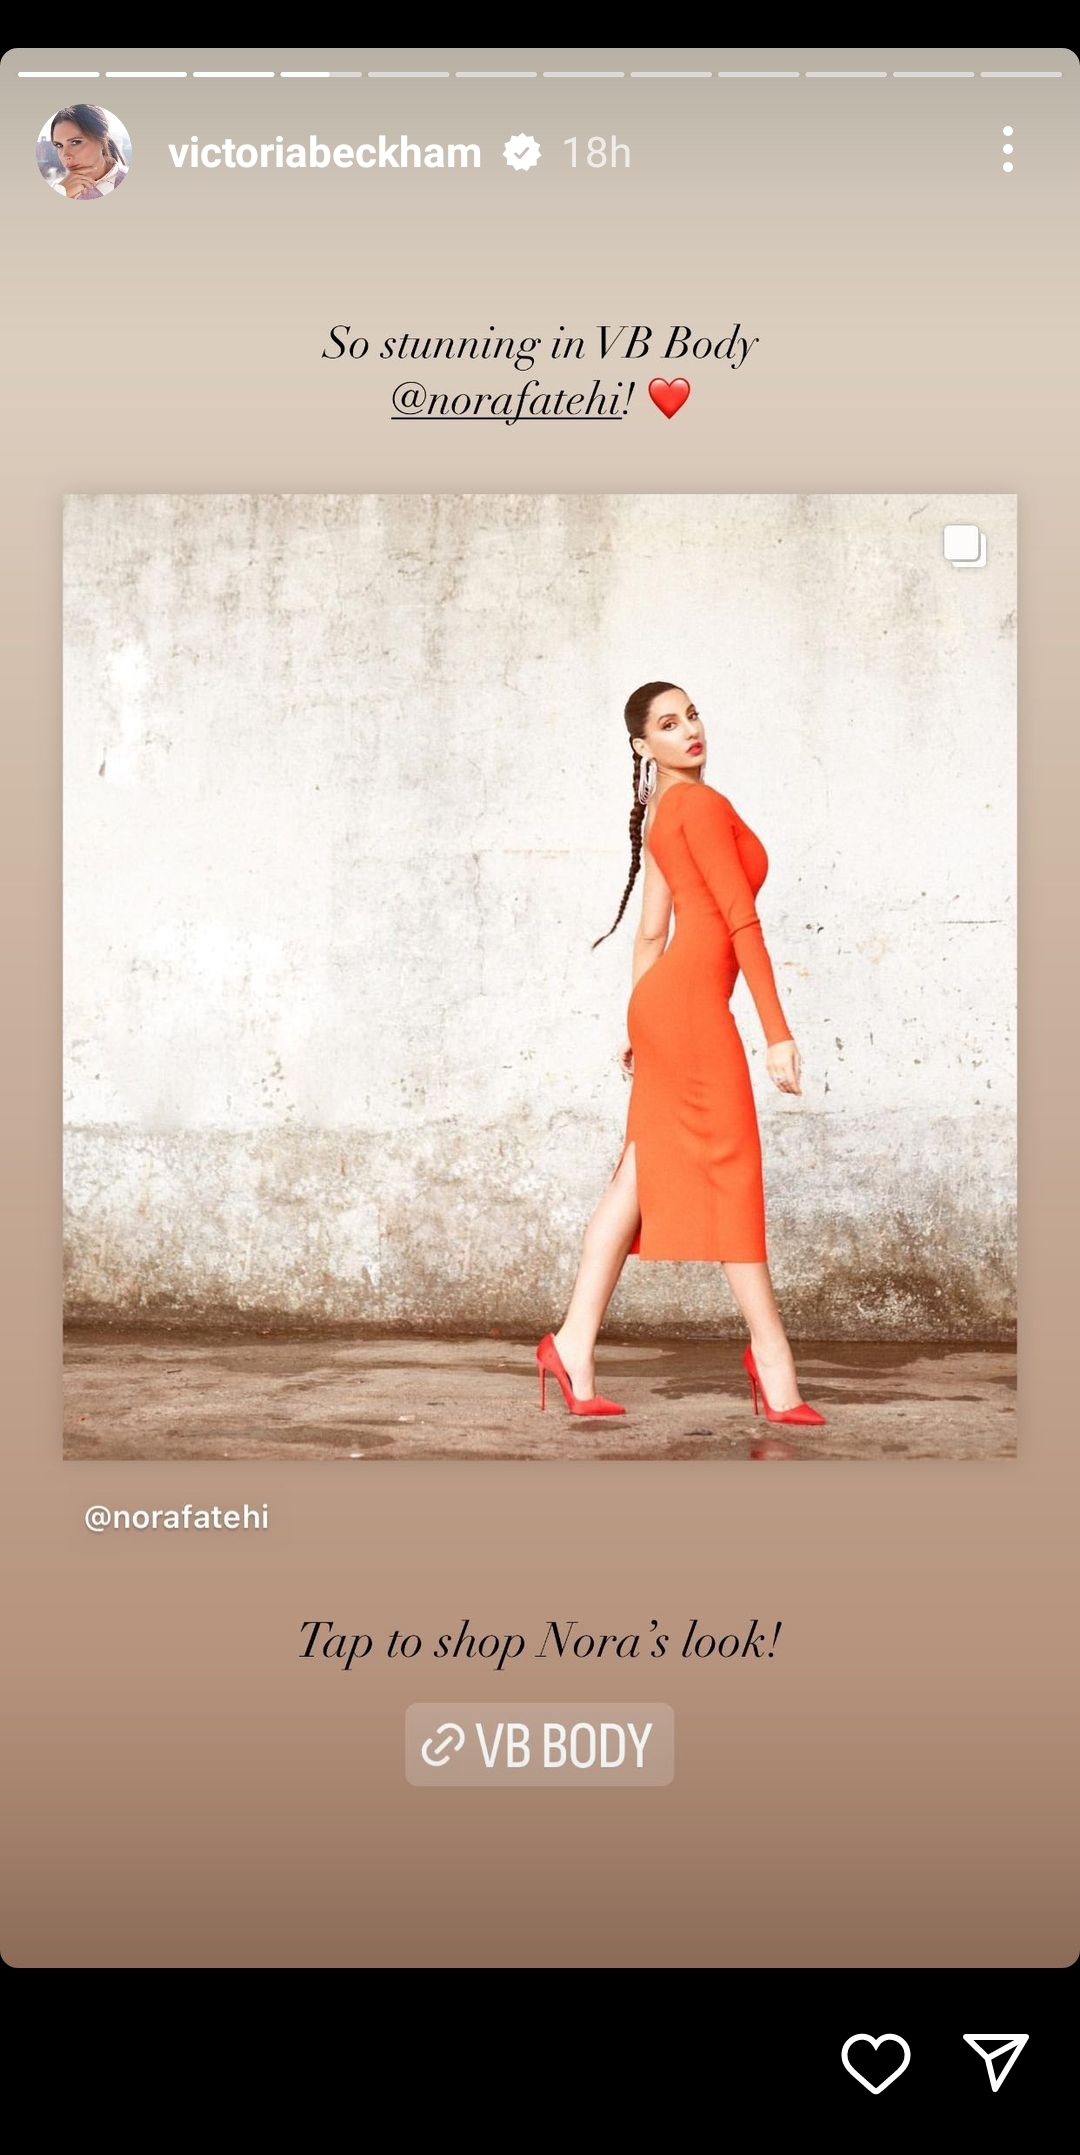 Nora Fatehi's post that Victoria Beckham re-shared on her Instagram account.